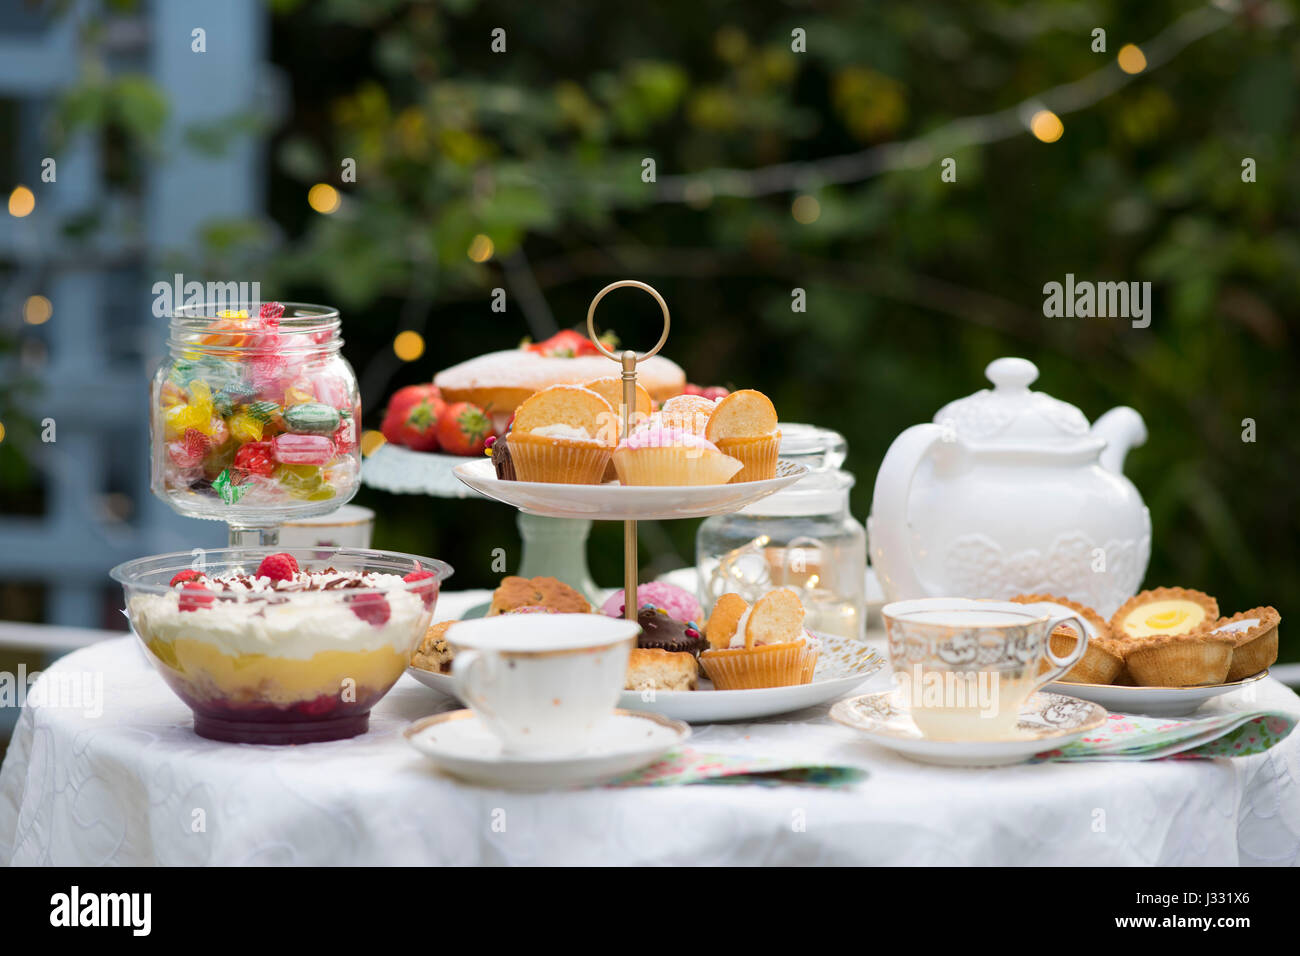 A table prepared for afternoon tea / garden party in a garden. Stock Photo